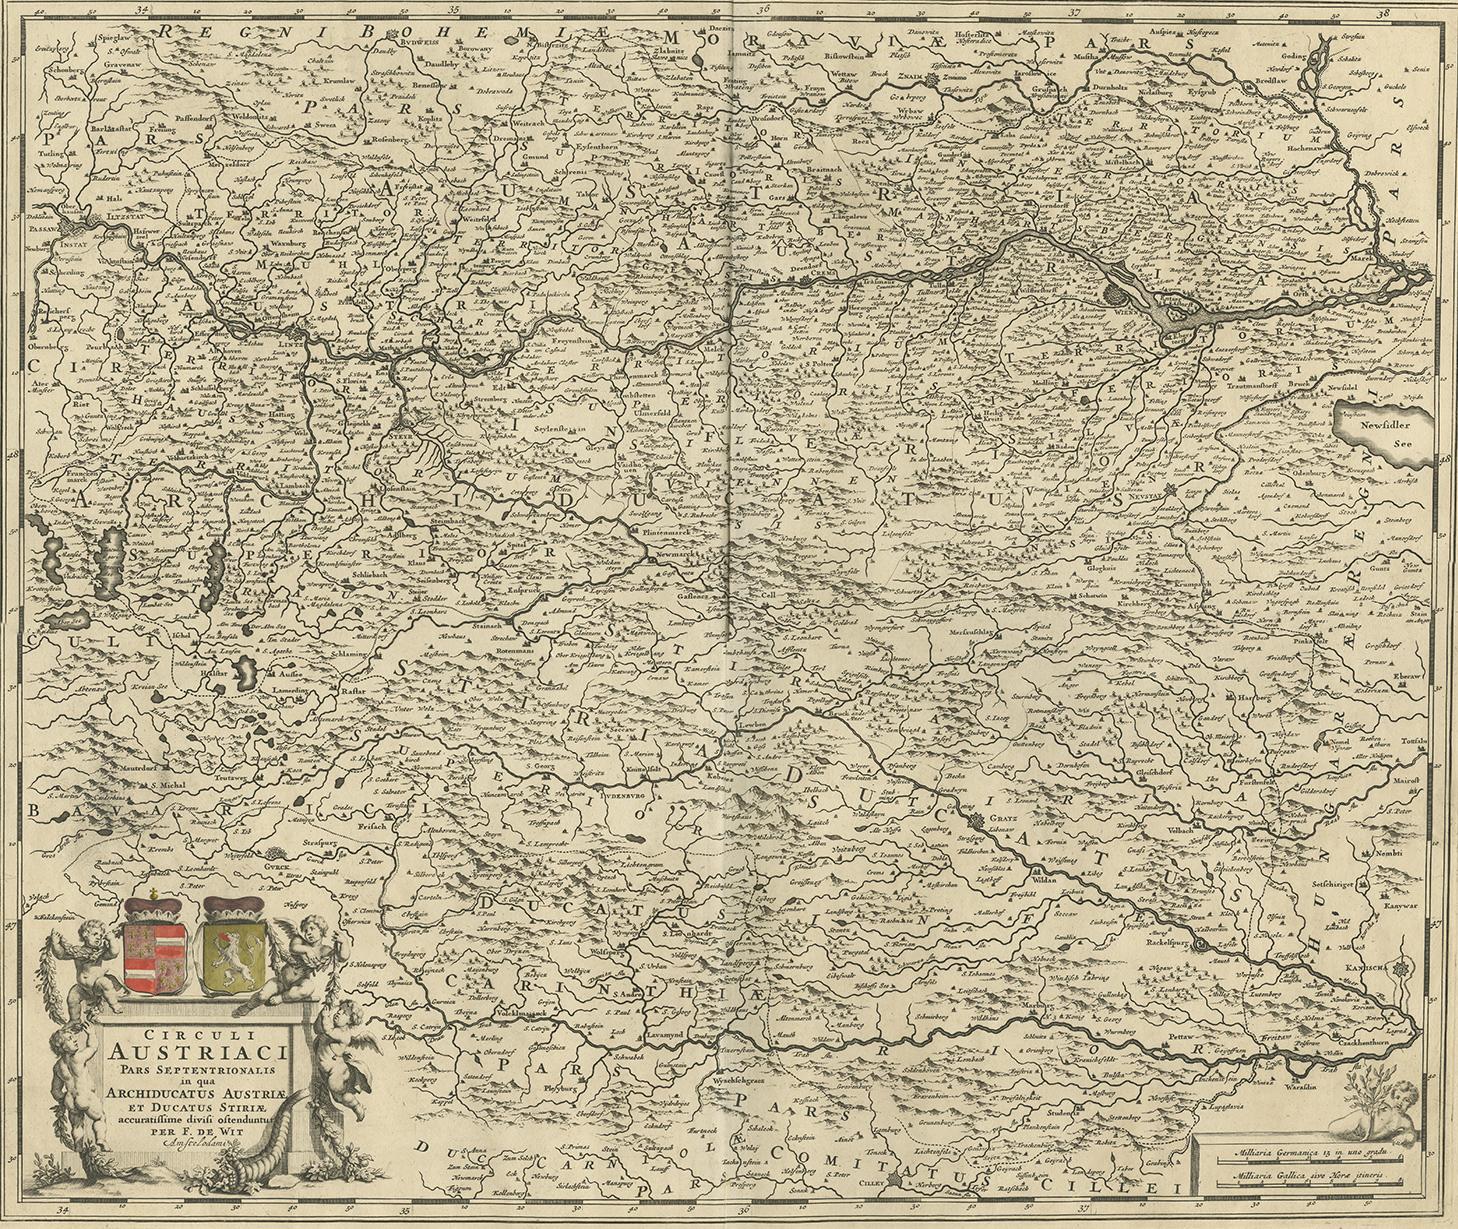 Antique map titled 'Circuli Austriaci pars Septentrionalis in qua Archiducatus'. Decorative and detailed map of Austria by F. de Wit.